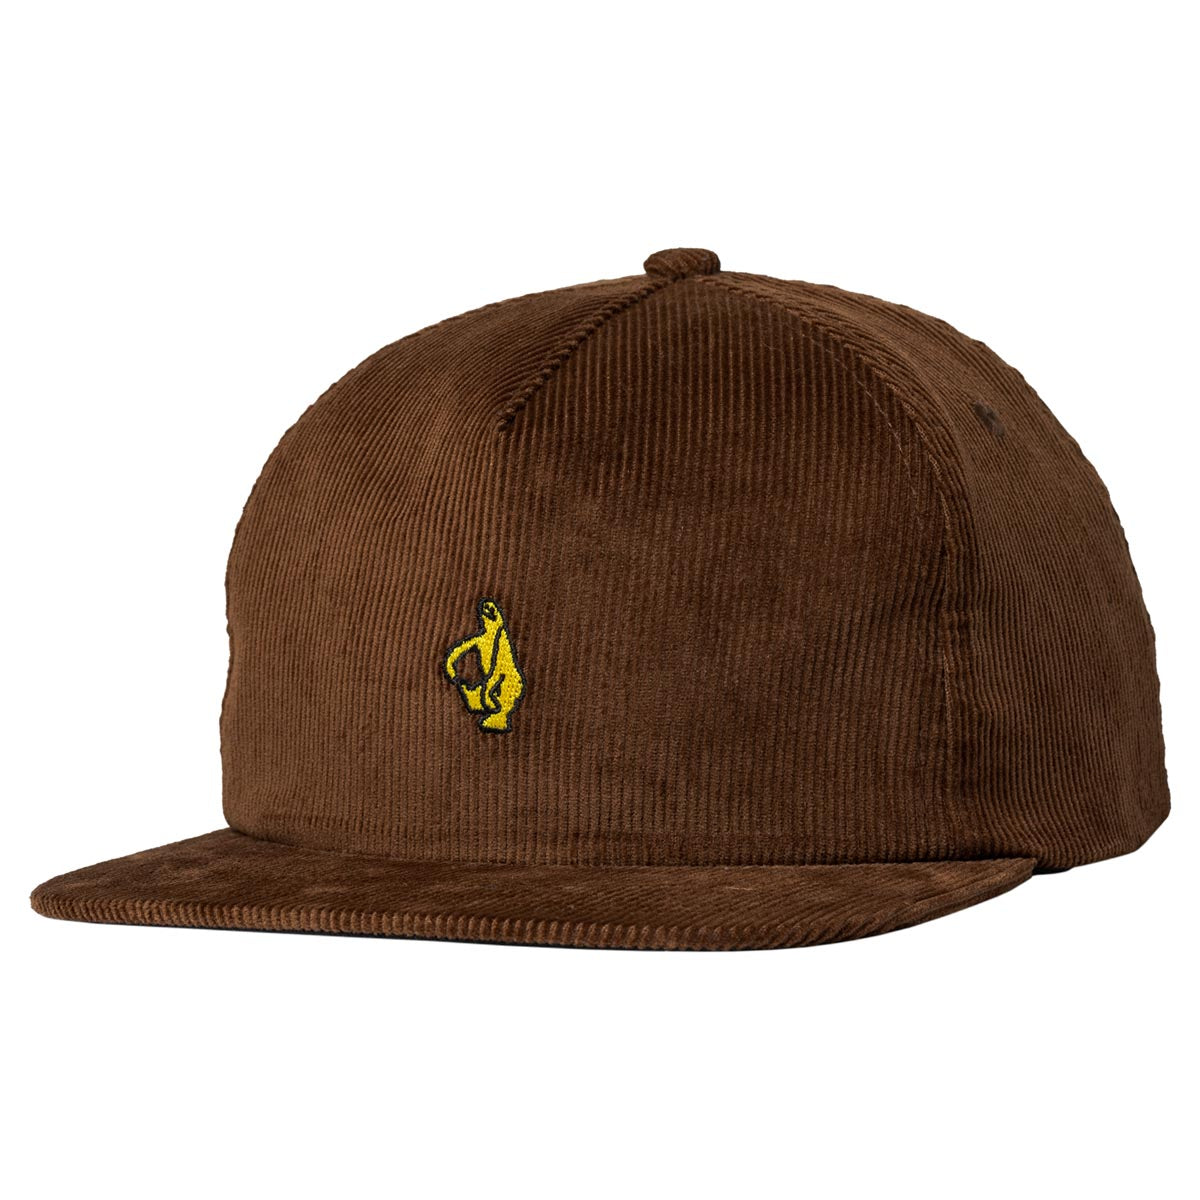 Krooked Shmoo Snapback Hat - Brown/Gold image 1